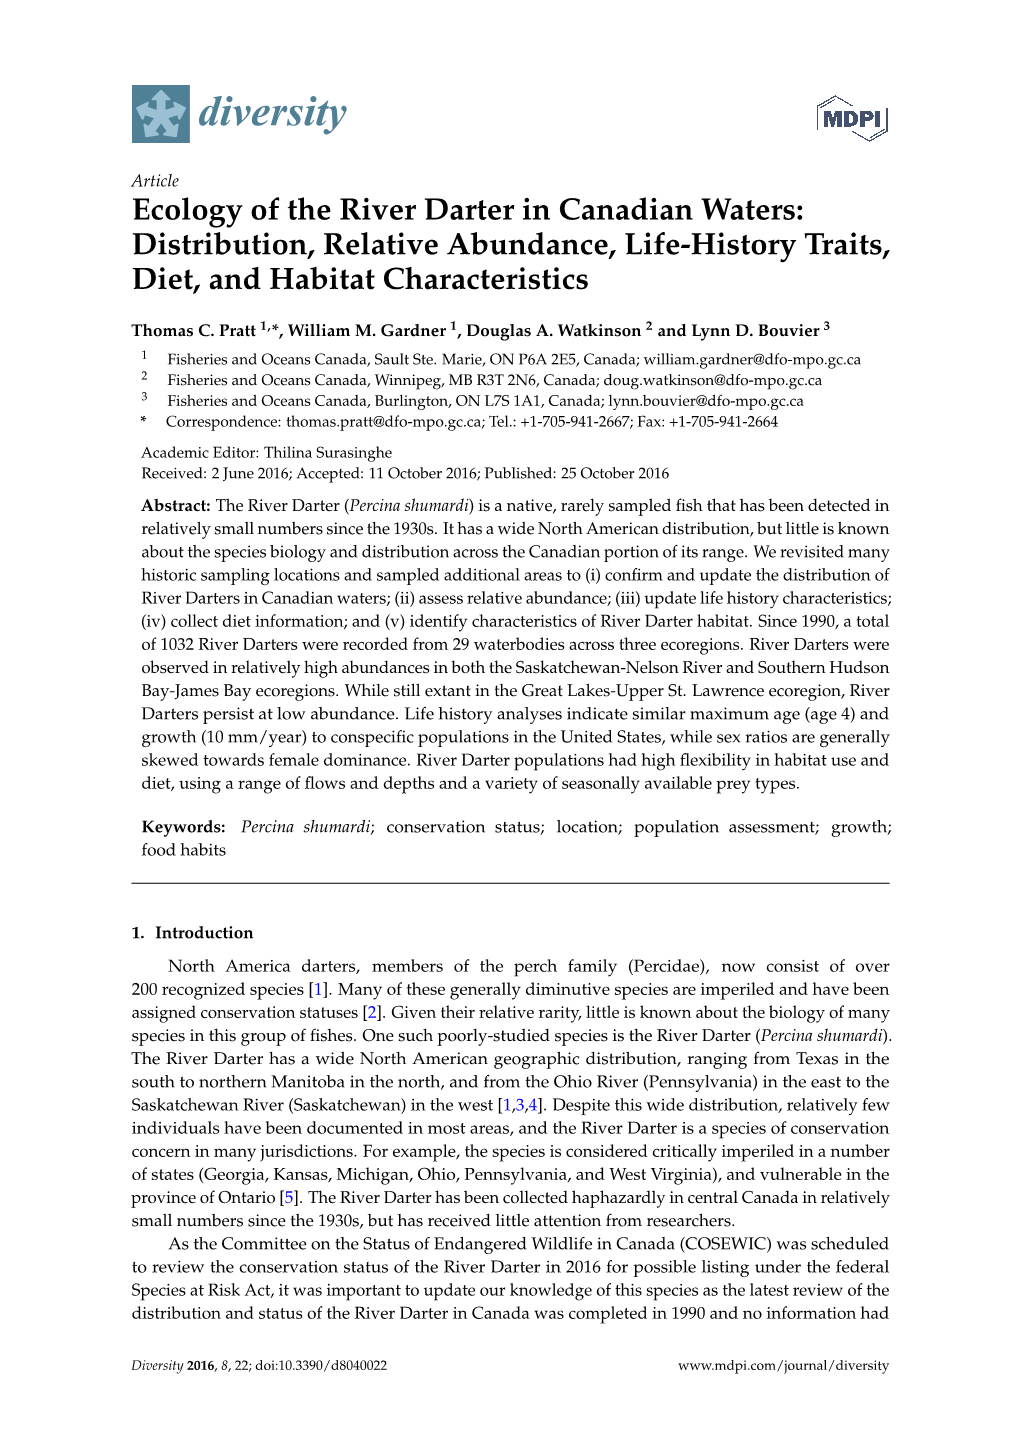 Distribution, Relative Abundance, Life-History Traits, Diet, and Habitat Characteristics